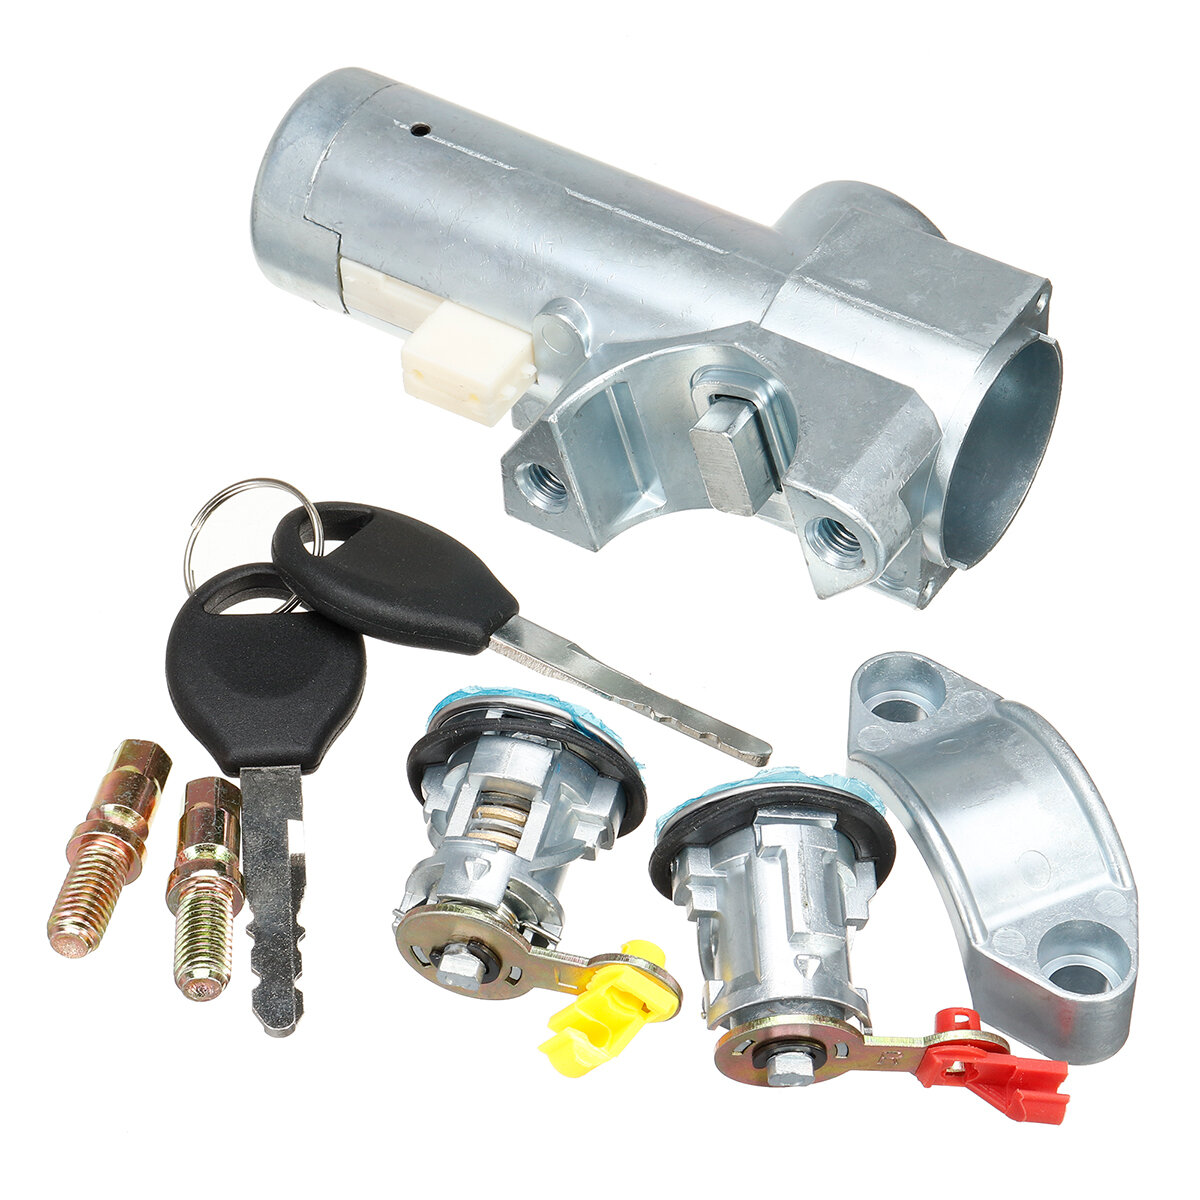 Set of 3 Ignition Barrel Lock & Keys Metal For Nissan Navara D22 03/97 - 05/06